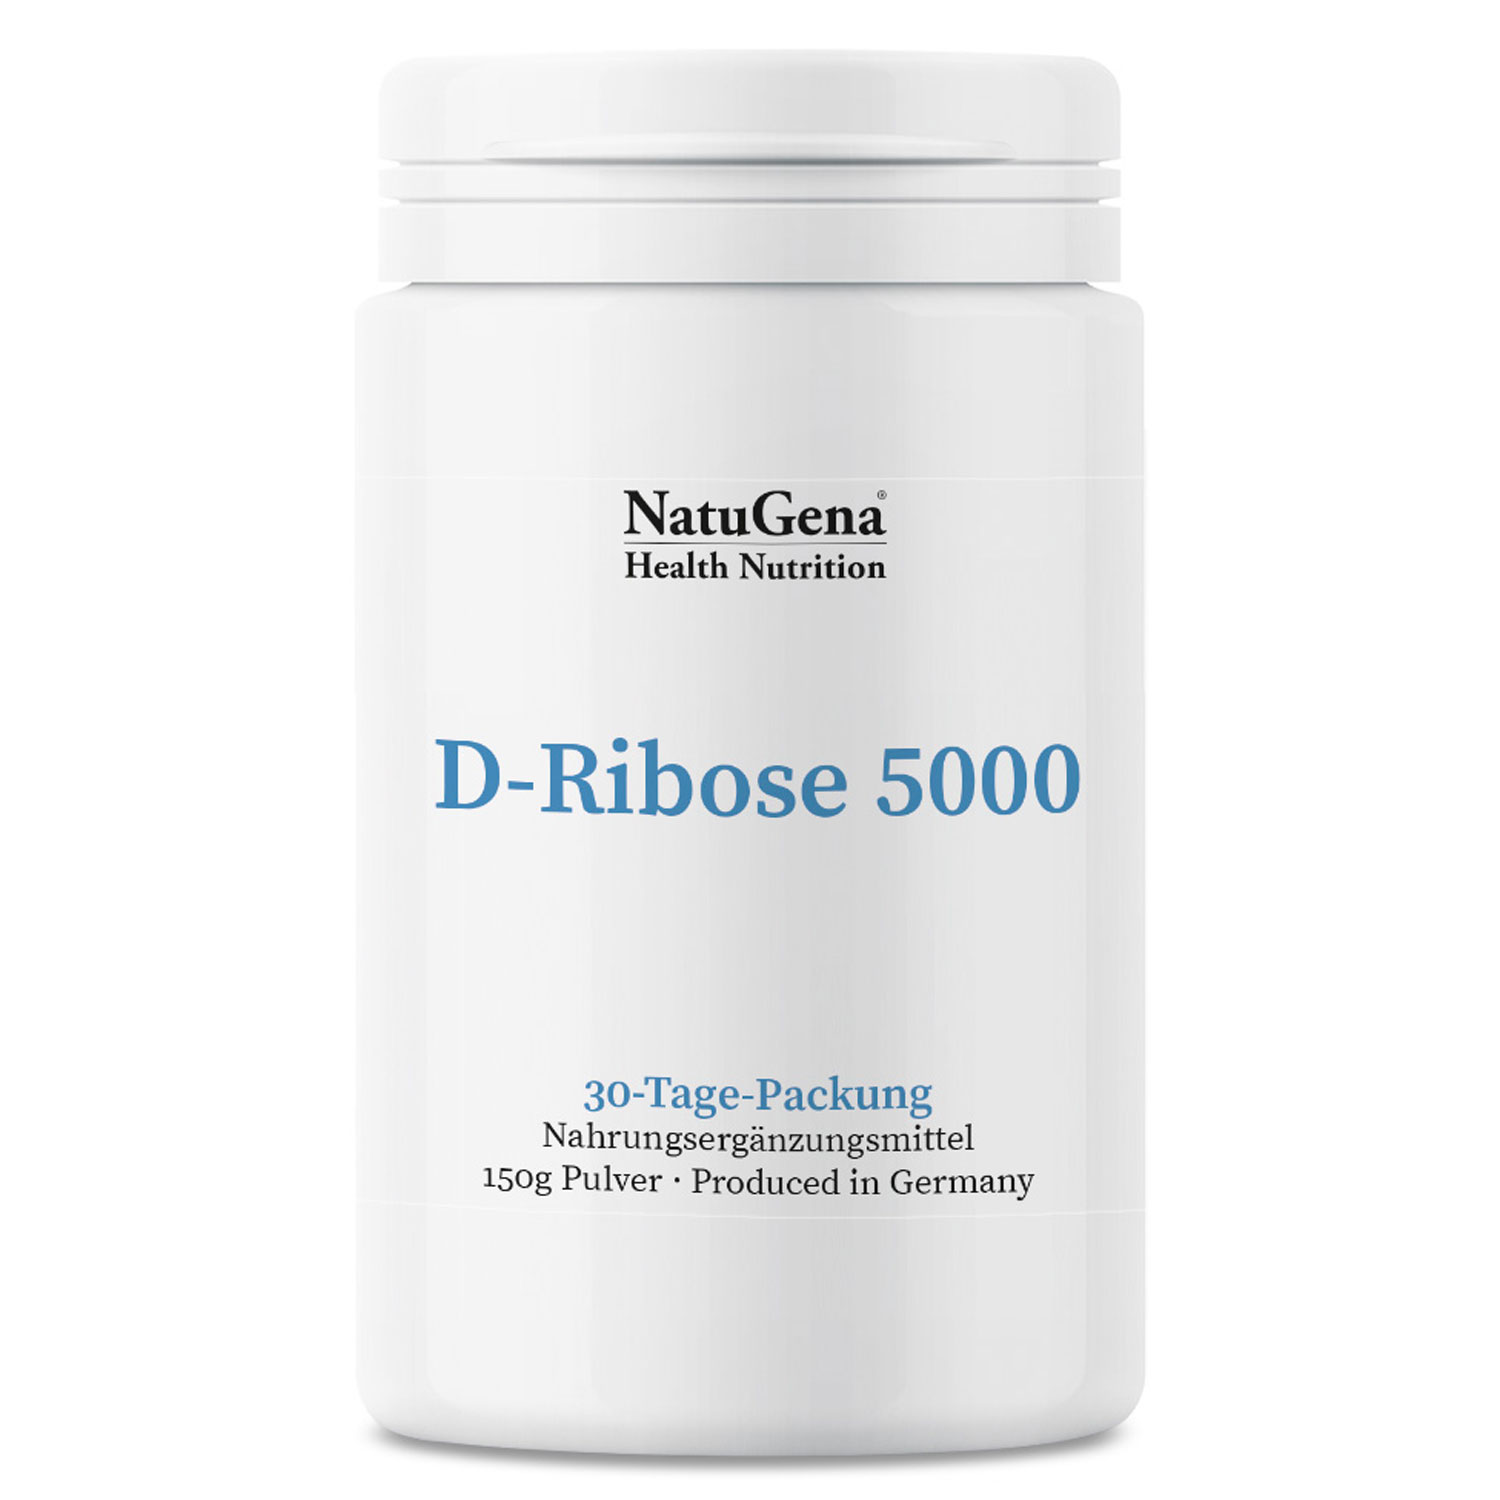 D-Ribose 5000 von NatuGena - 150g